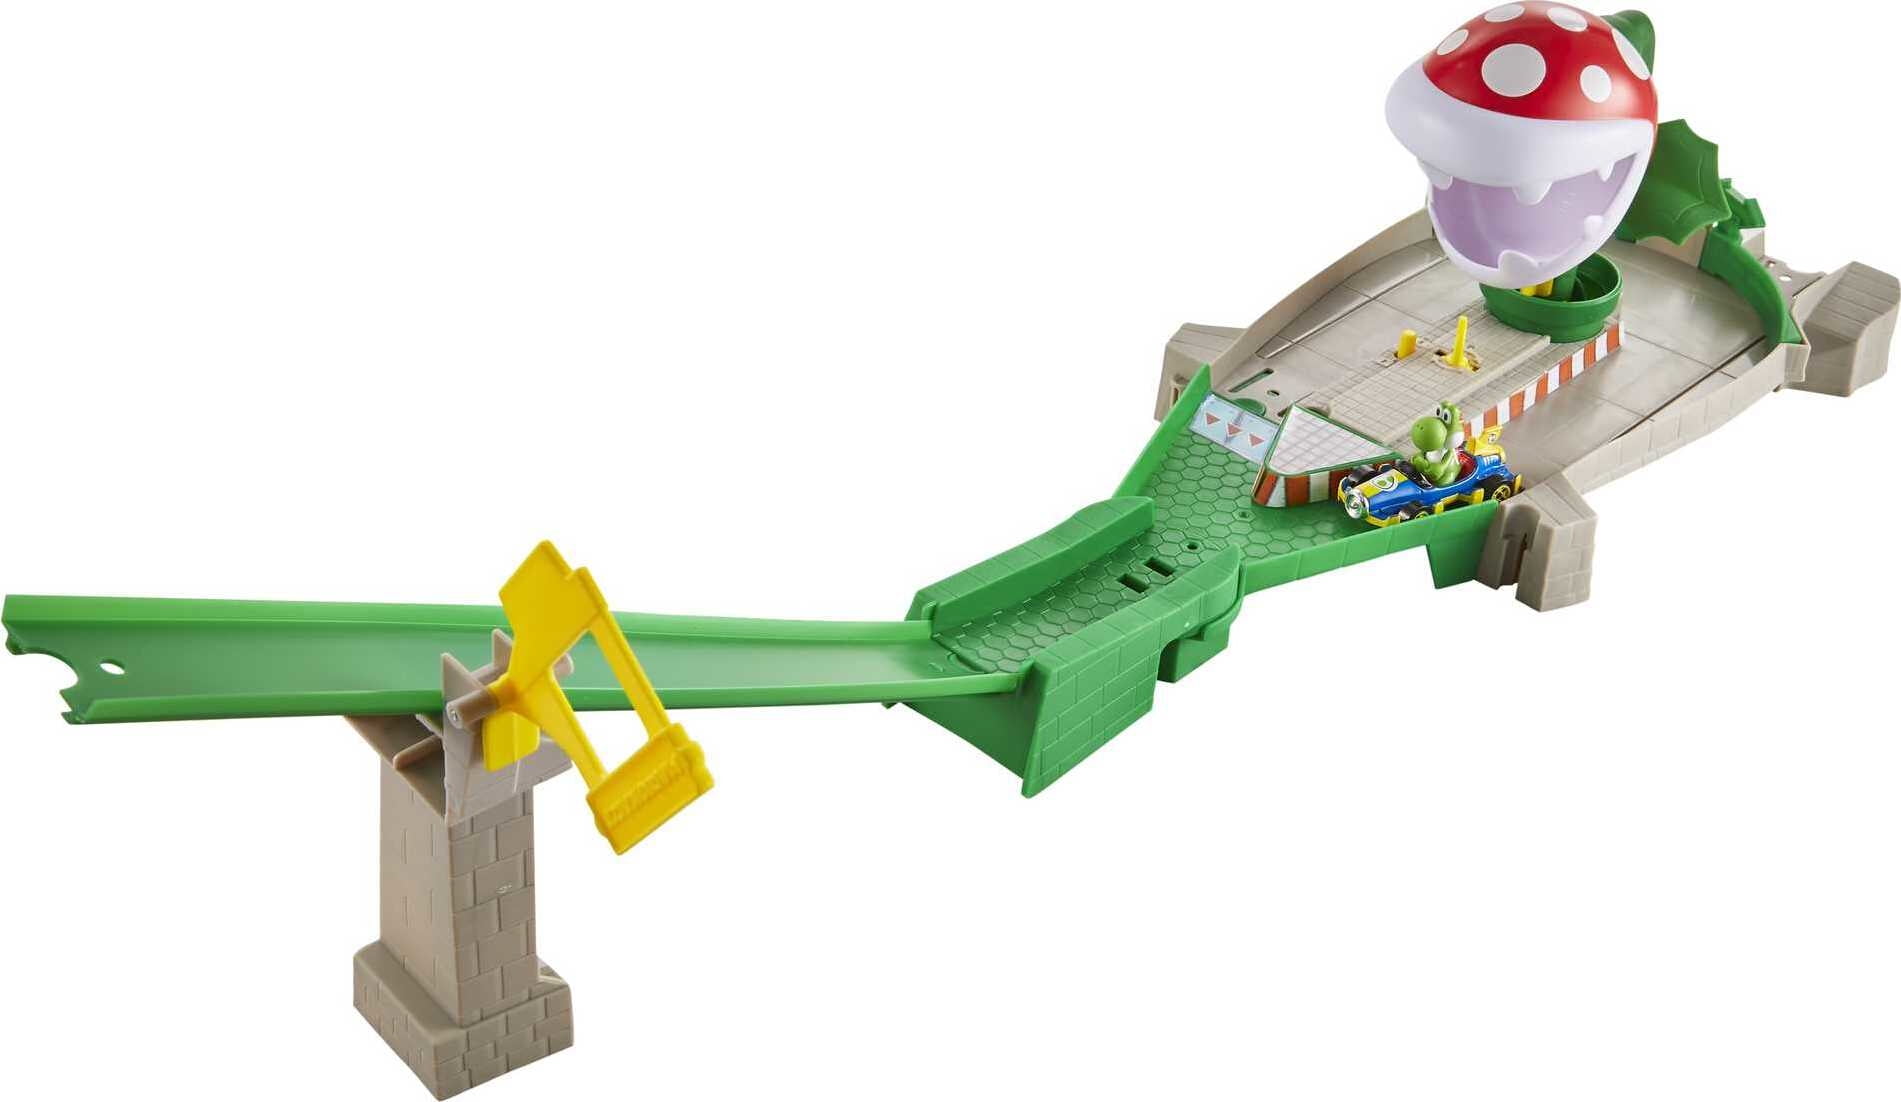 Hot Wheels Mario Kart Piranha Plant Track Set with 1:64 Scale Yoshi Toy Kart & Gravity Launcher